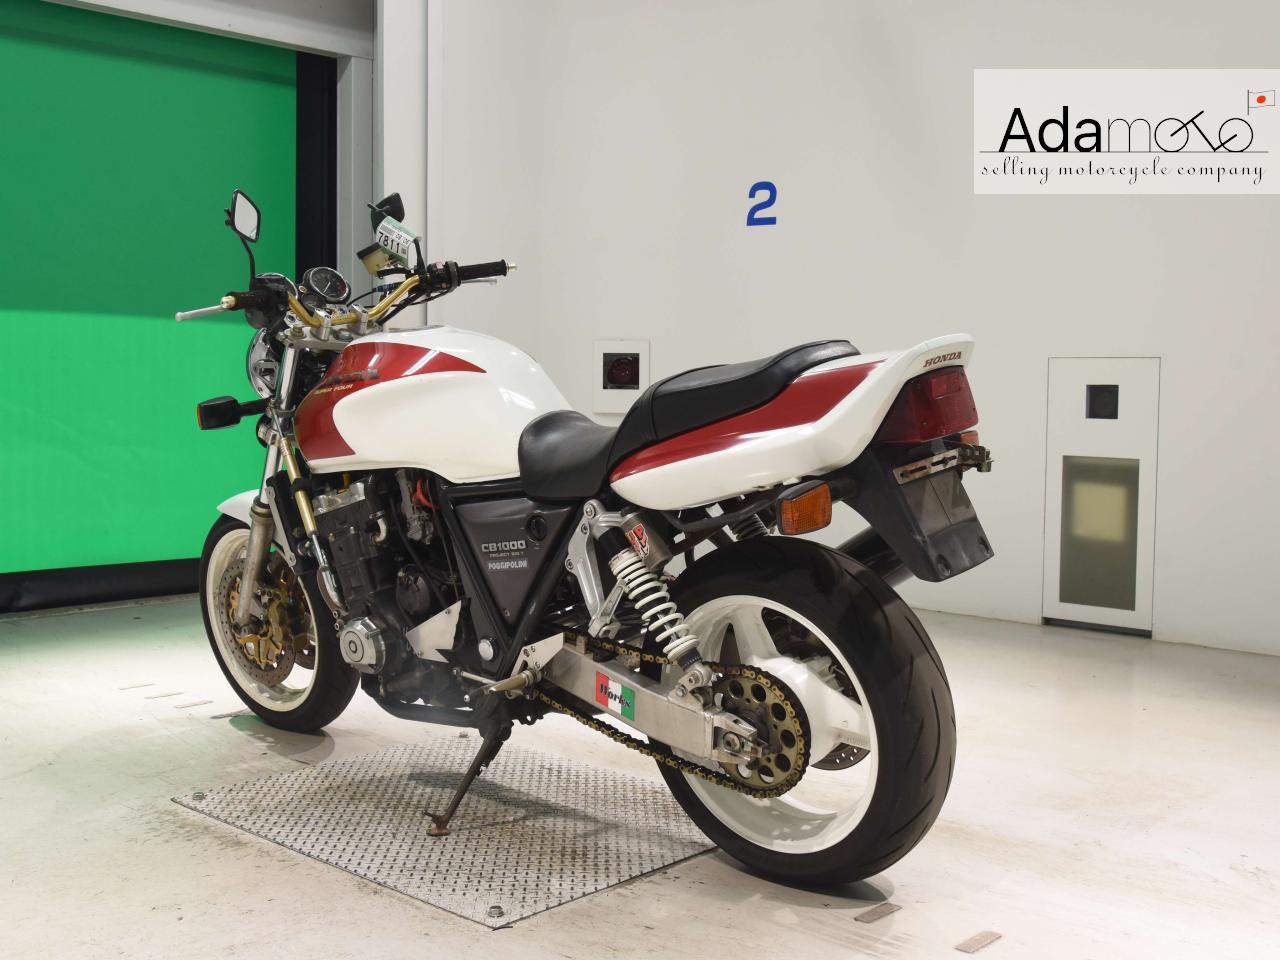 Honda CB1000SF - Adamoto - Motorcycles from Japan